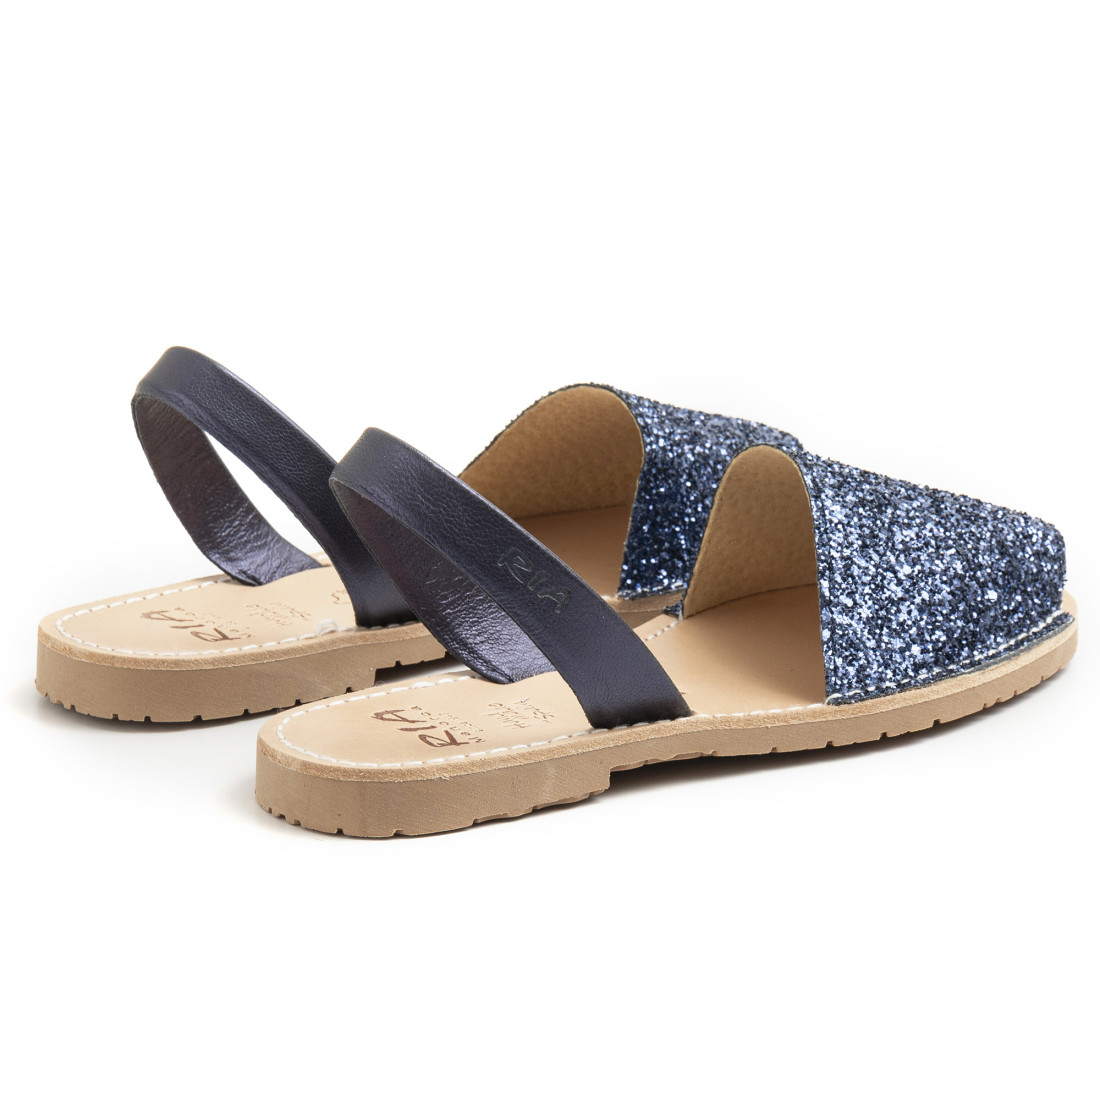 Women's Ria Menorca 21224 blue glitter sandals